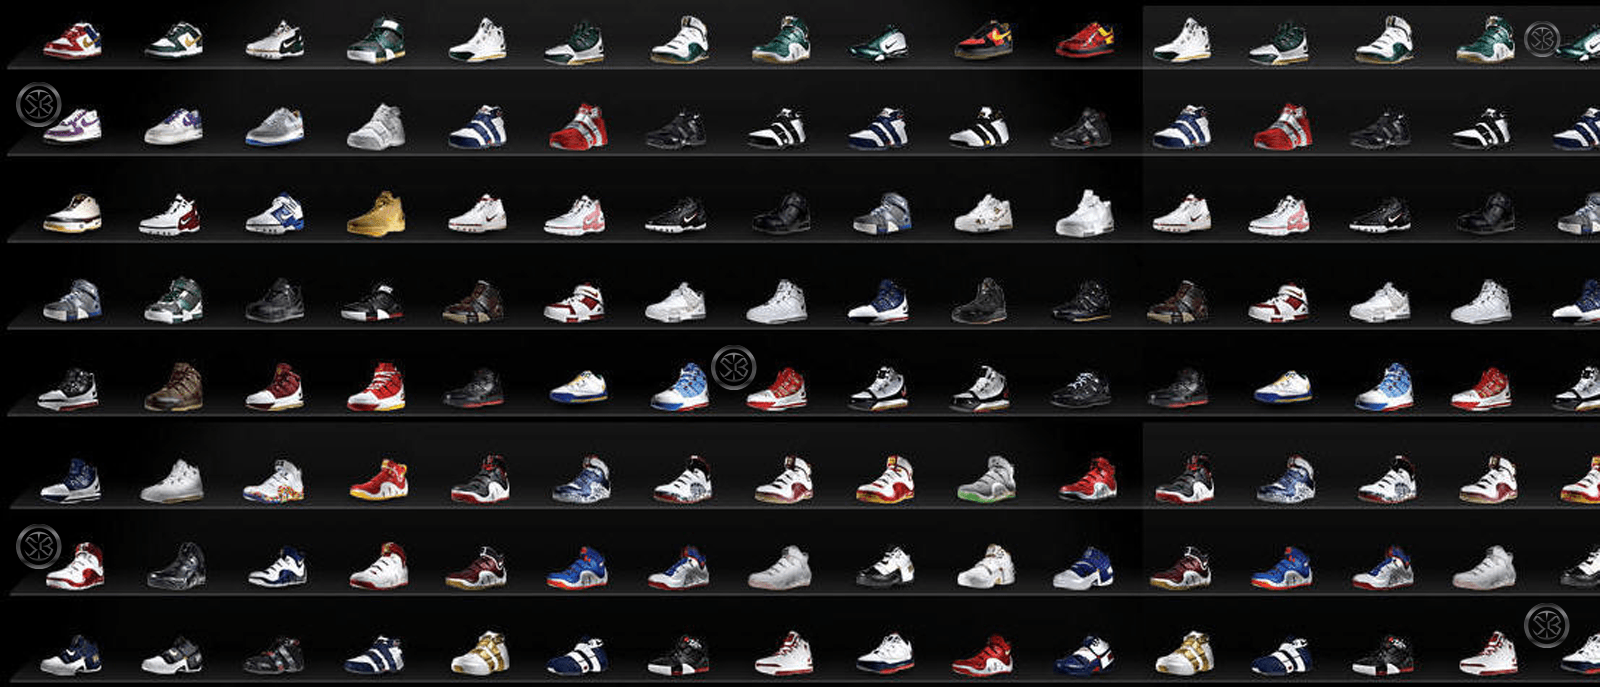 SneakerHDWallpapers.com – Your favorite sneakers in 4K, Retina, Mobile and HD  wallpaper resolutions! SneakerHDWallpapers.com - Your favorite sneakers in  4K, Retina, Mobile and HD wallpaper resolutions! -